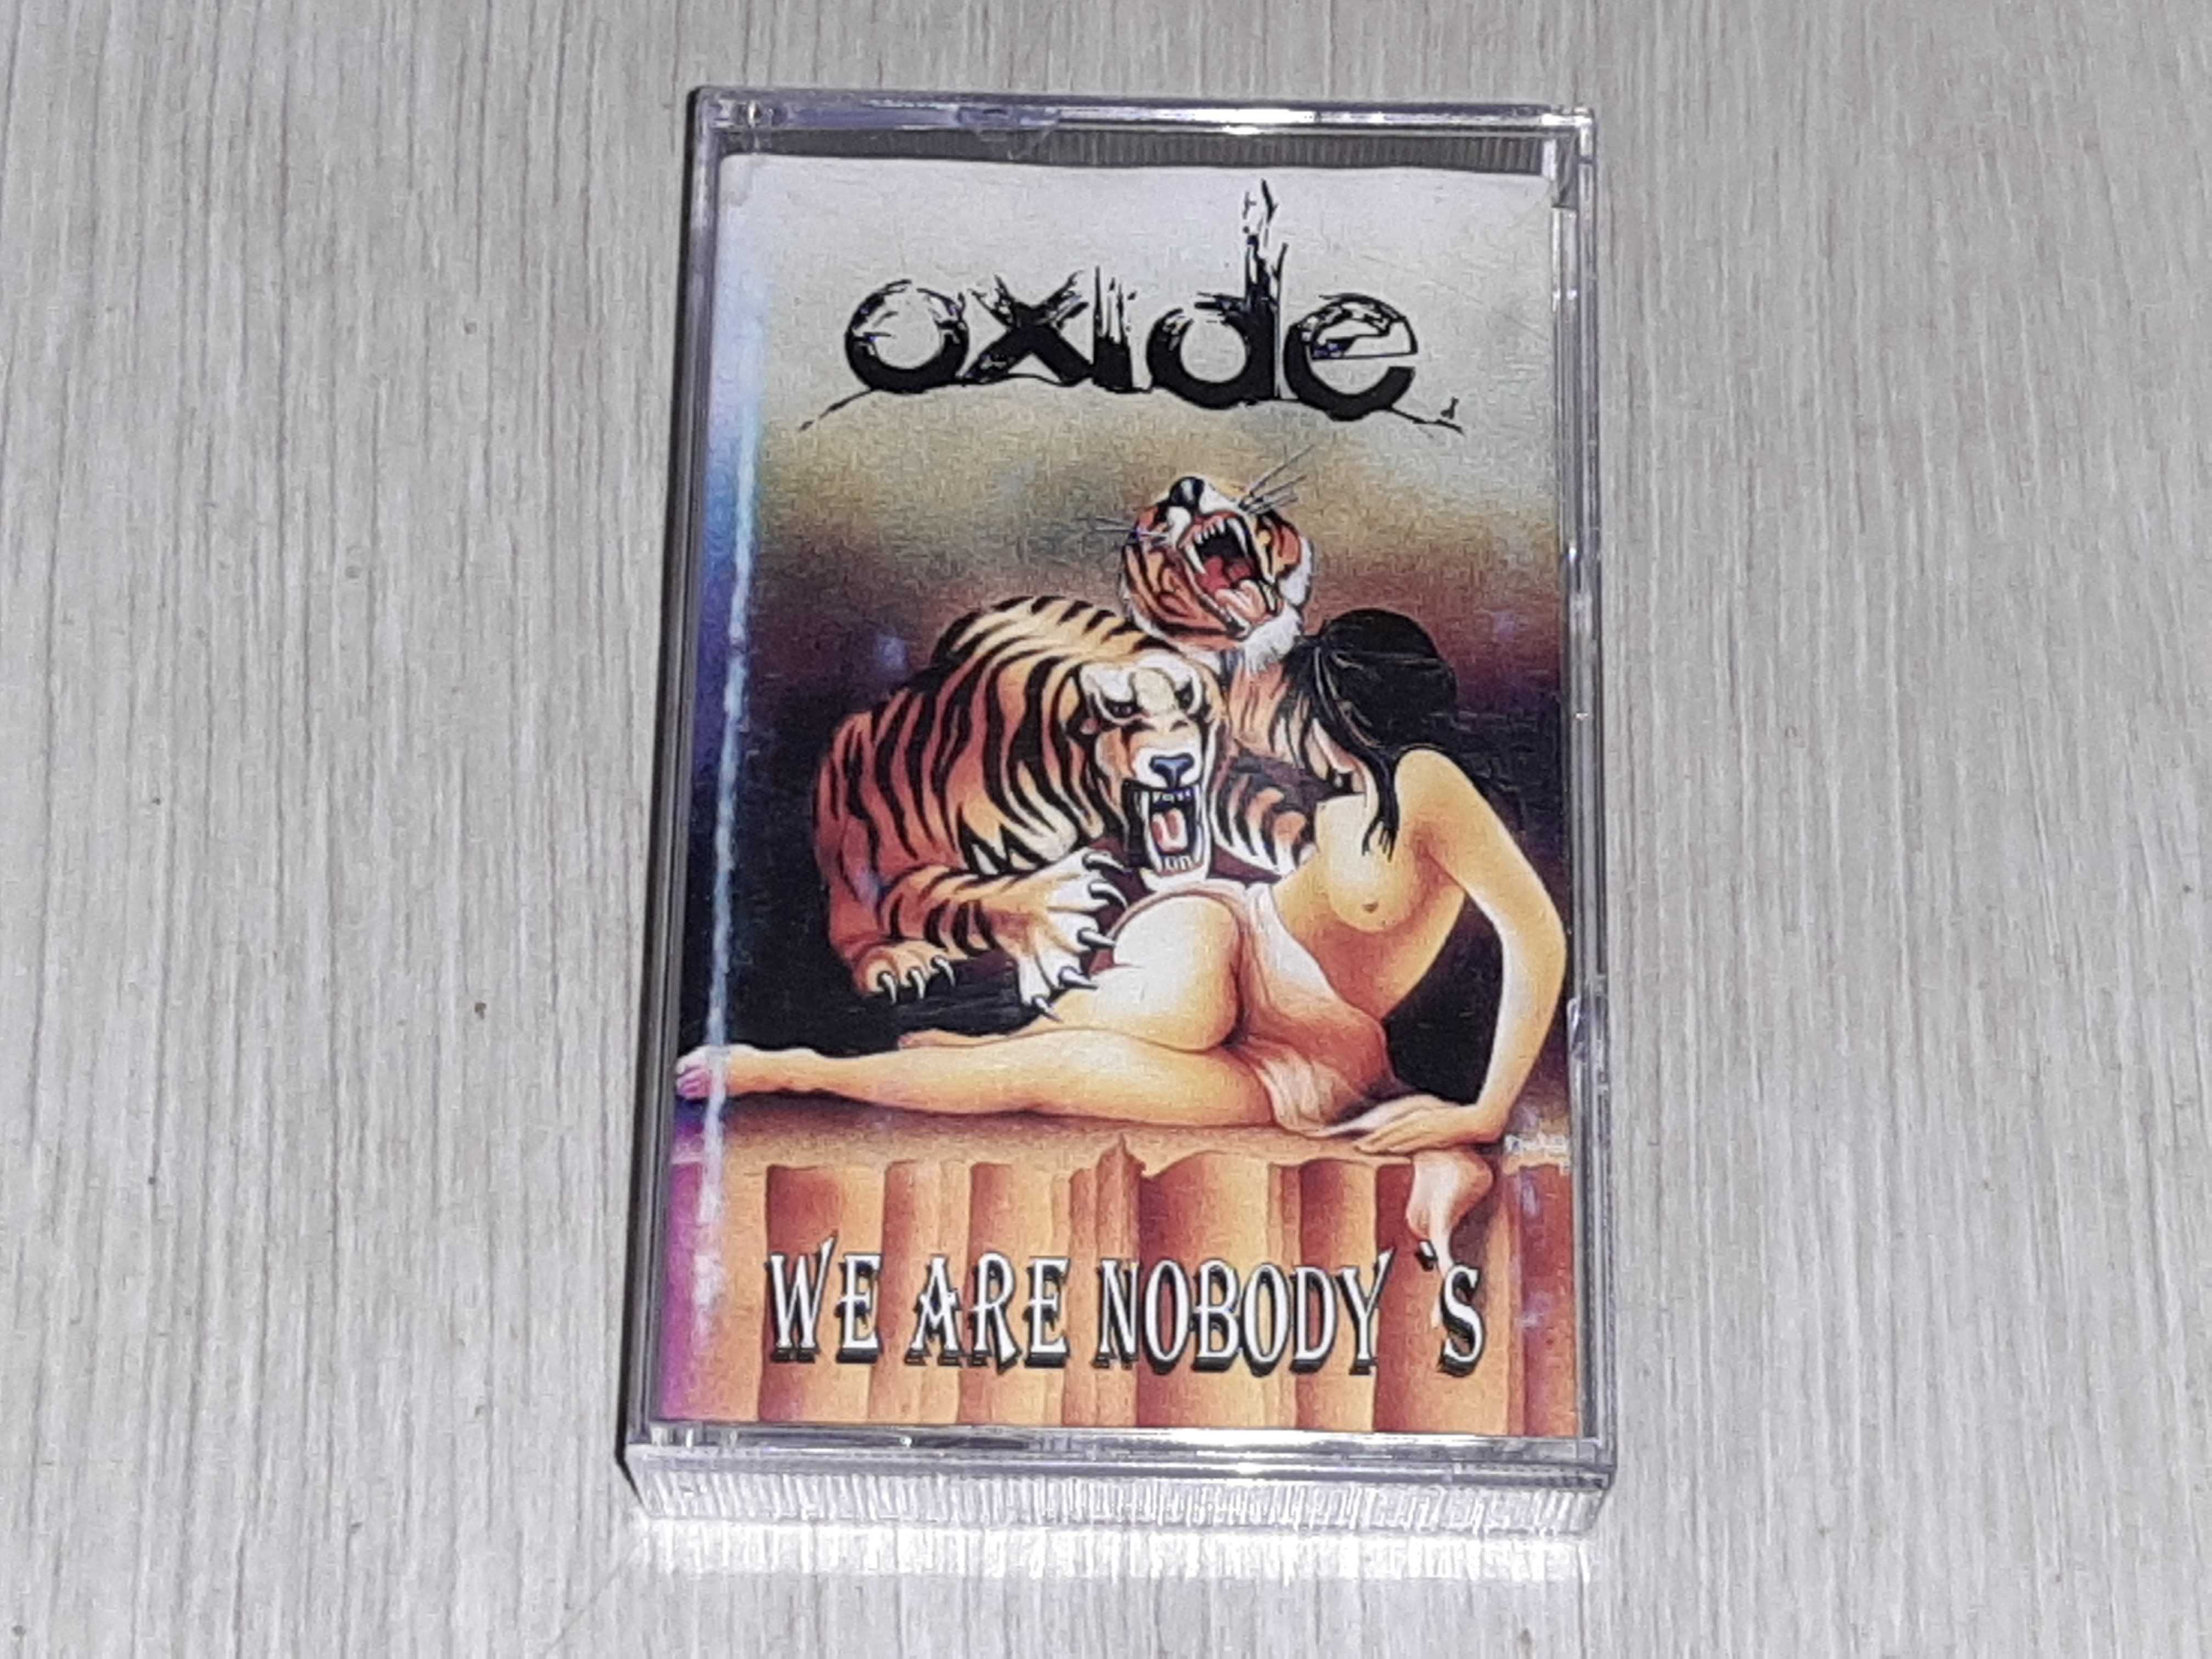 Oxide - We Are Nobody's (Thrash Metal)